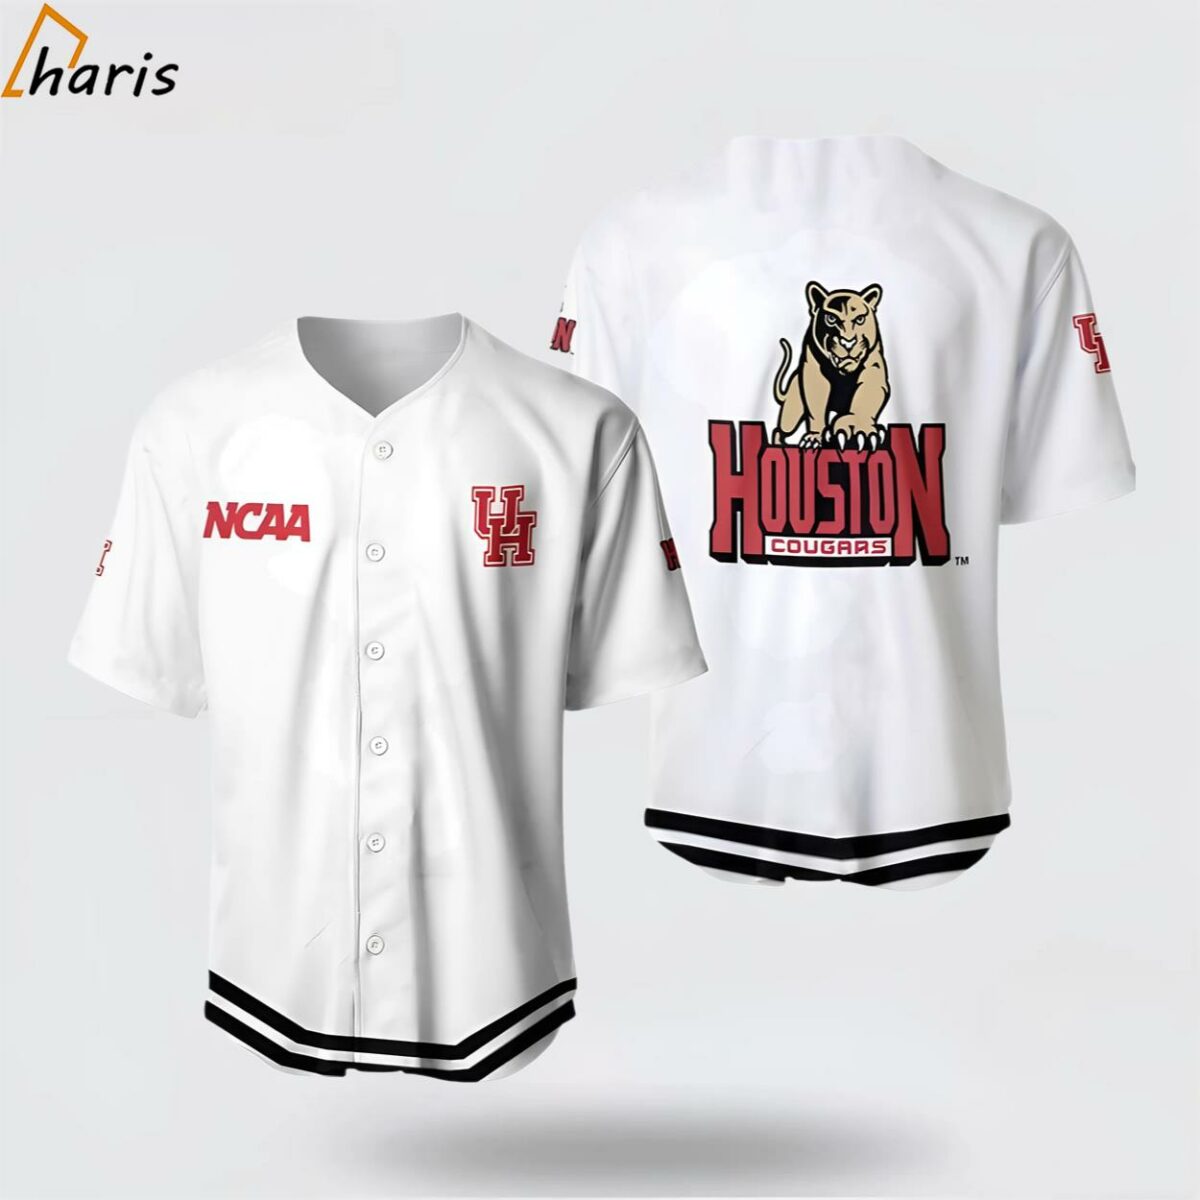 Houston Cougars Classic White With Mascot Baseball Jersey 1 jersey